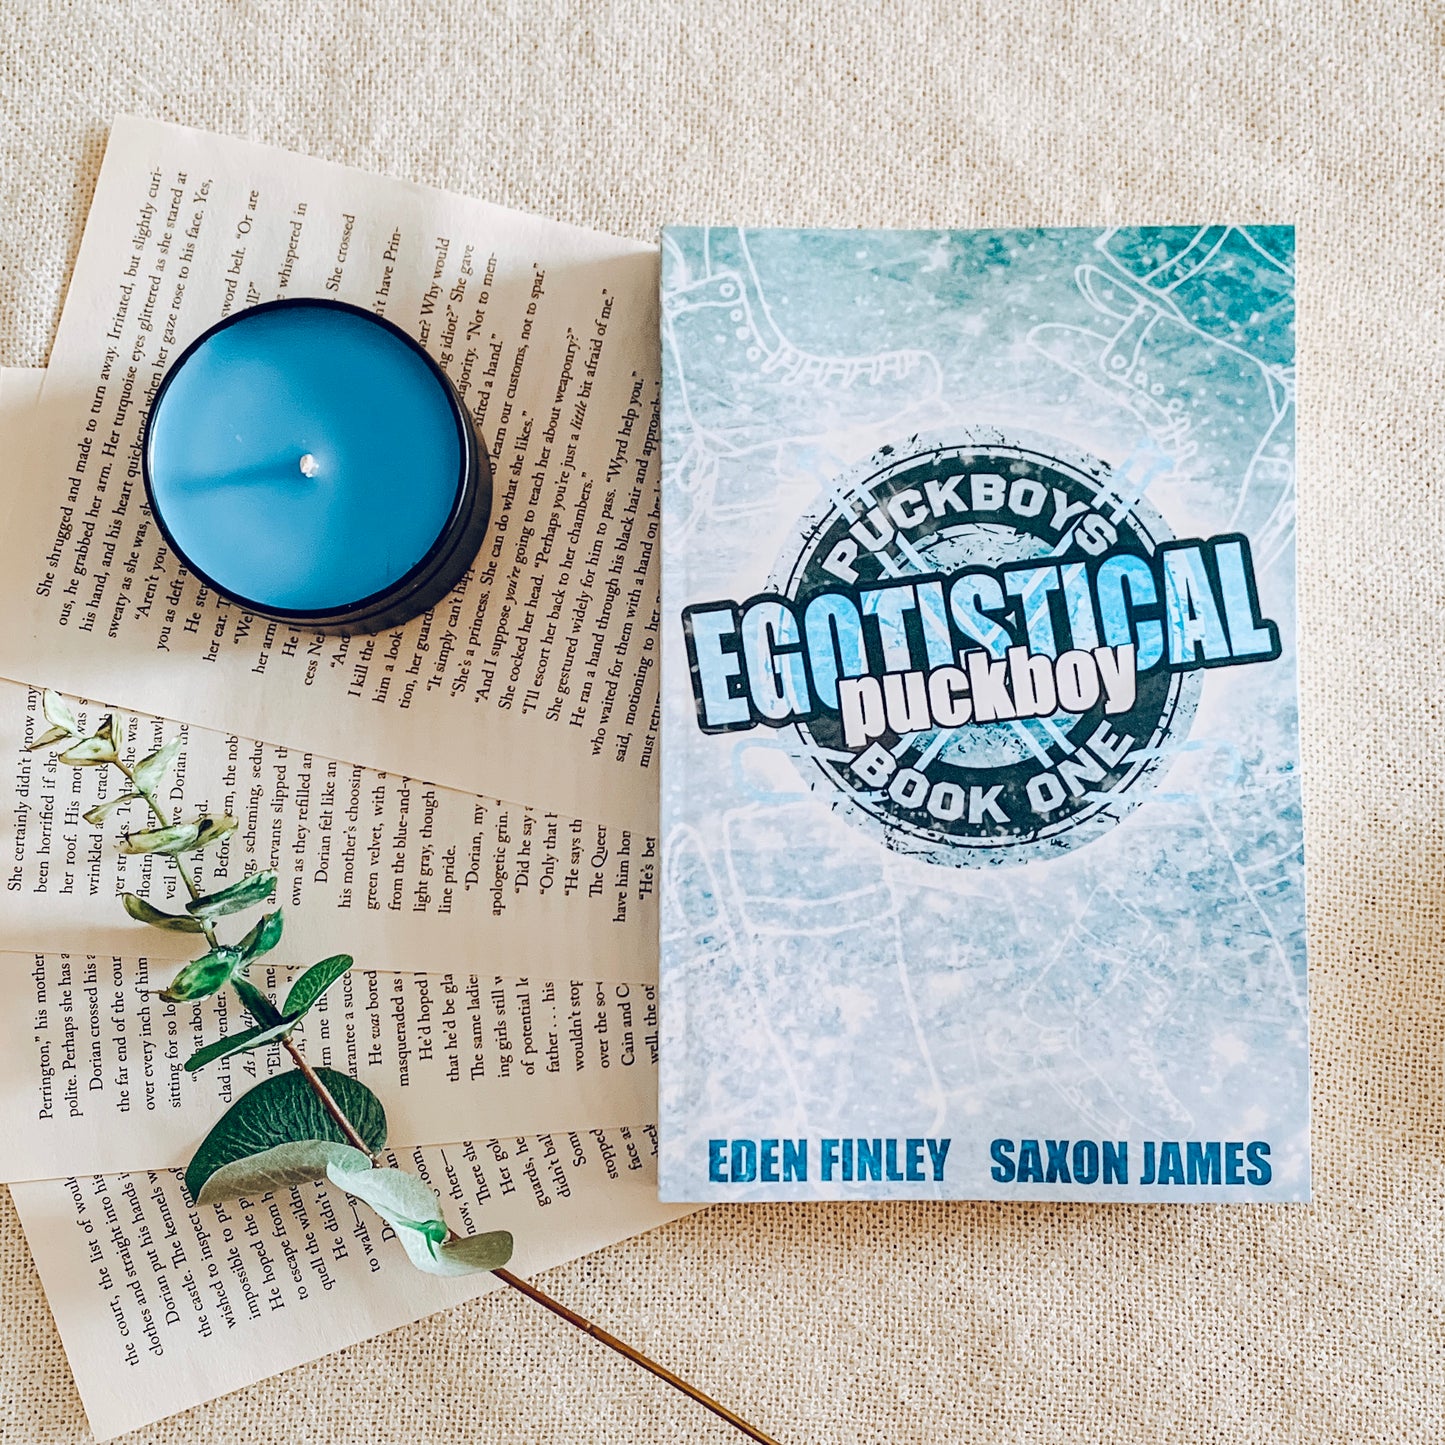 Egotistical Puckboy by Eden Finley and Saxon James